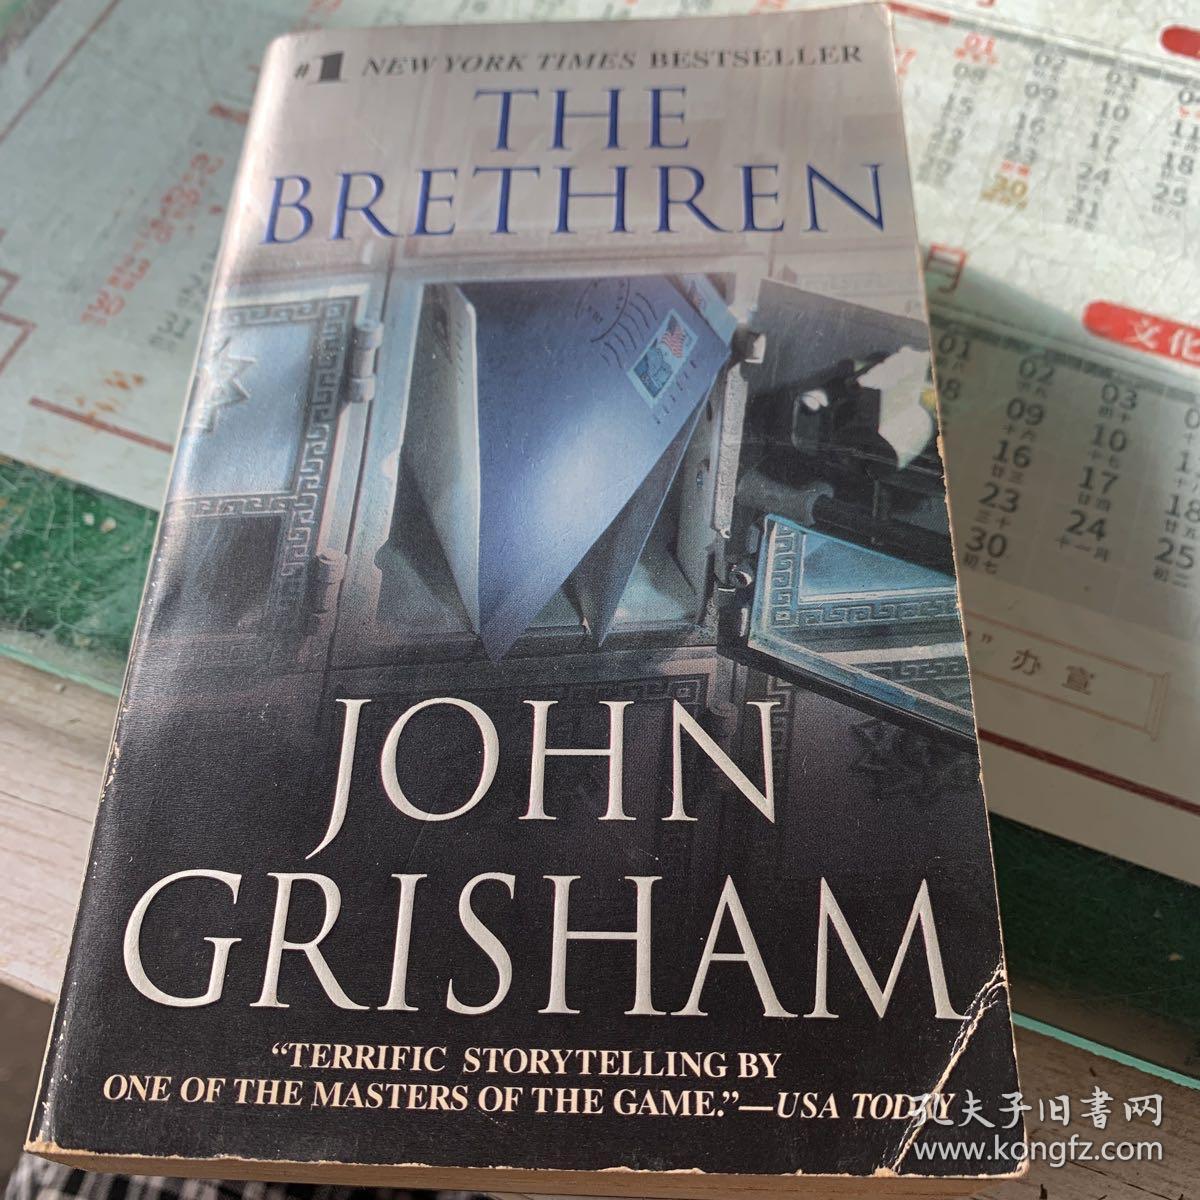 THE BRETHREN JOHN GRSHAM